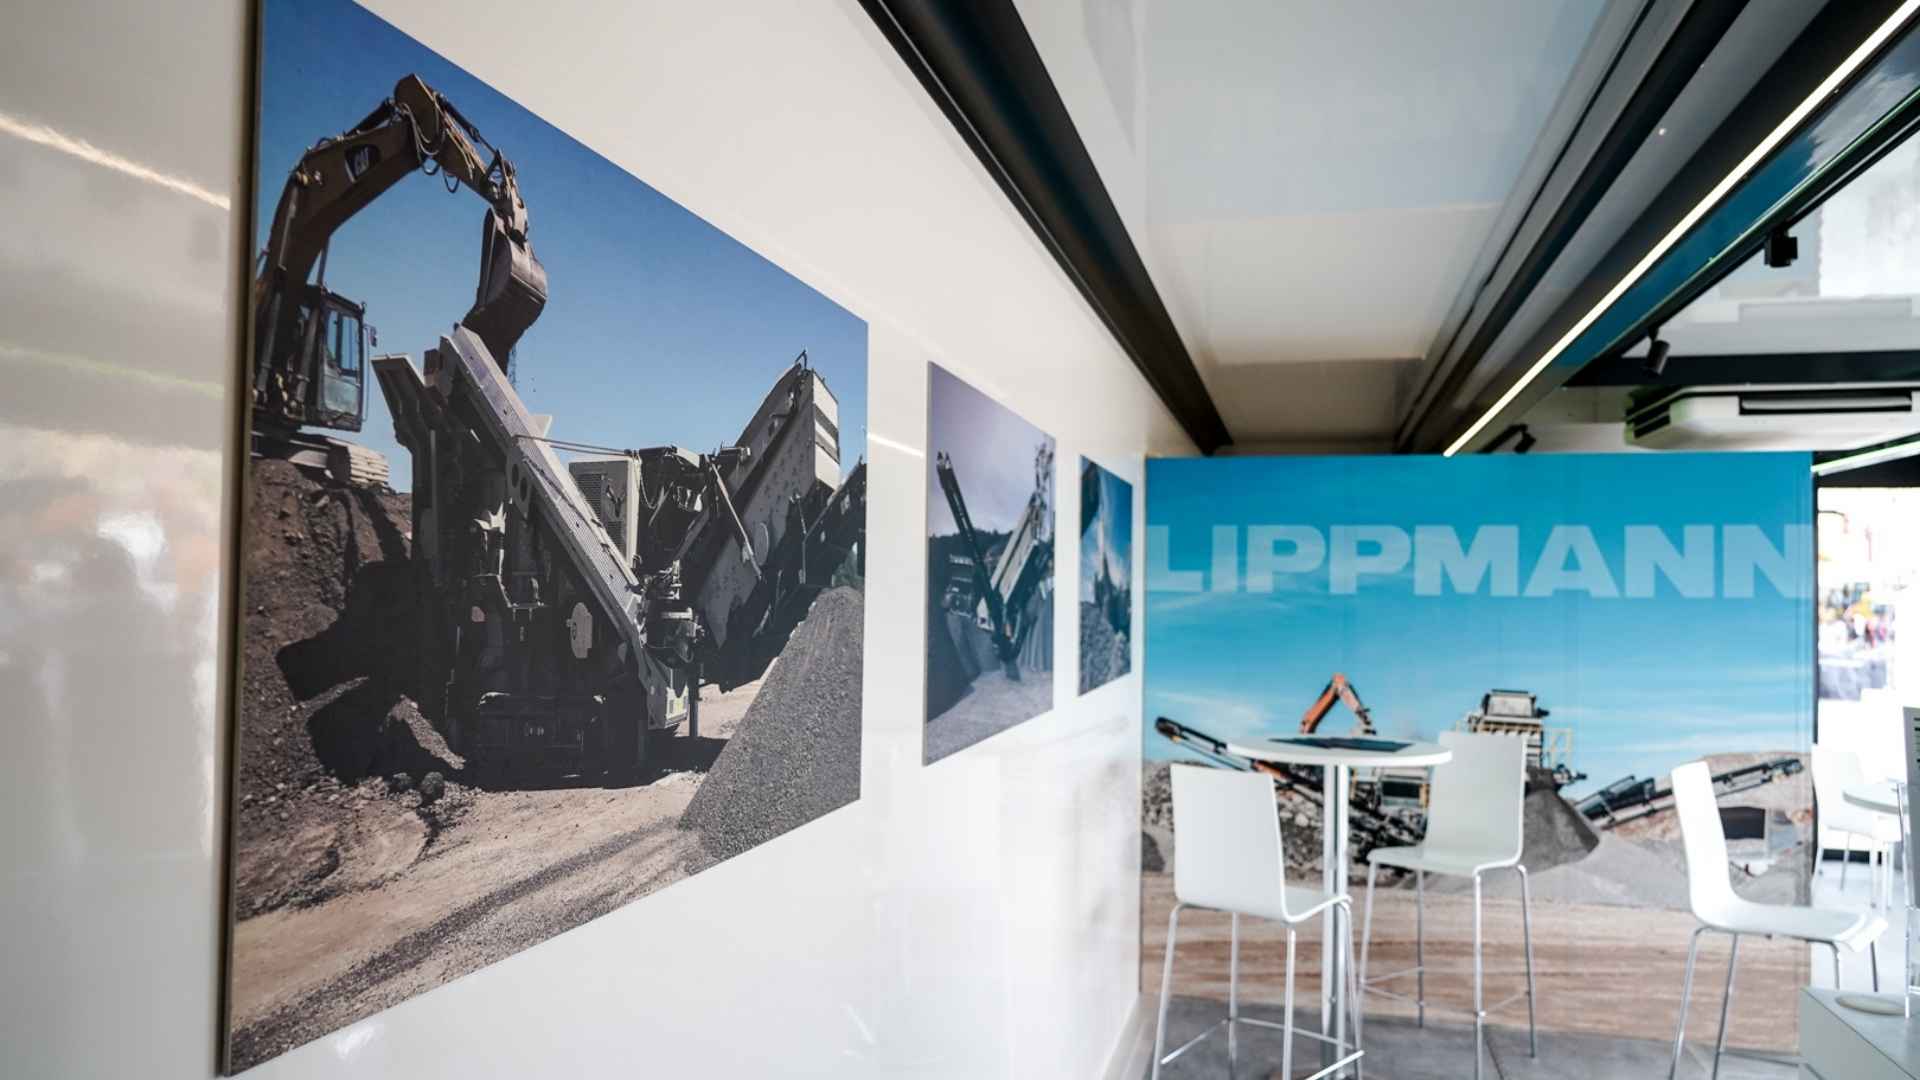 lippman exhibition graphics at hillhead